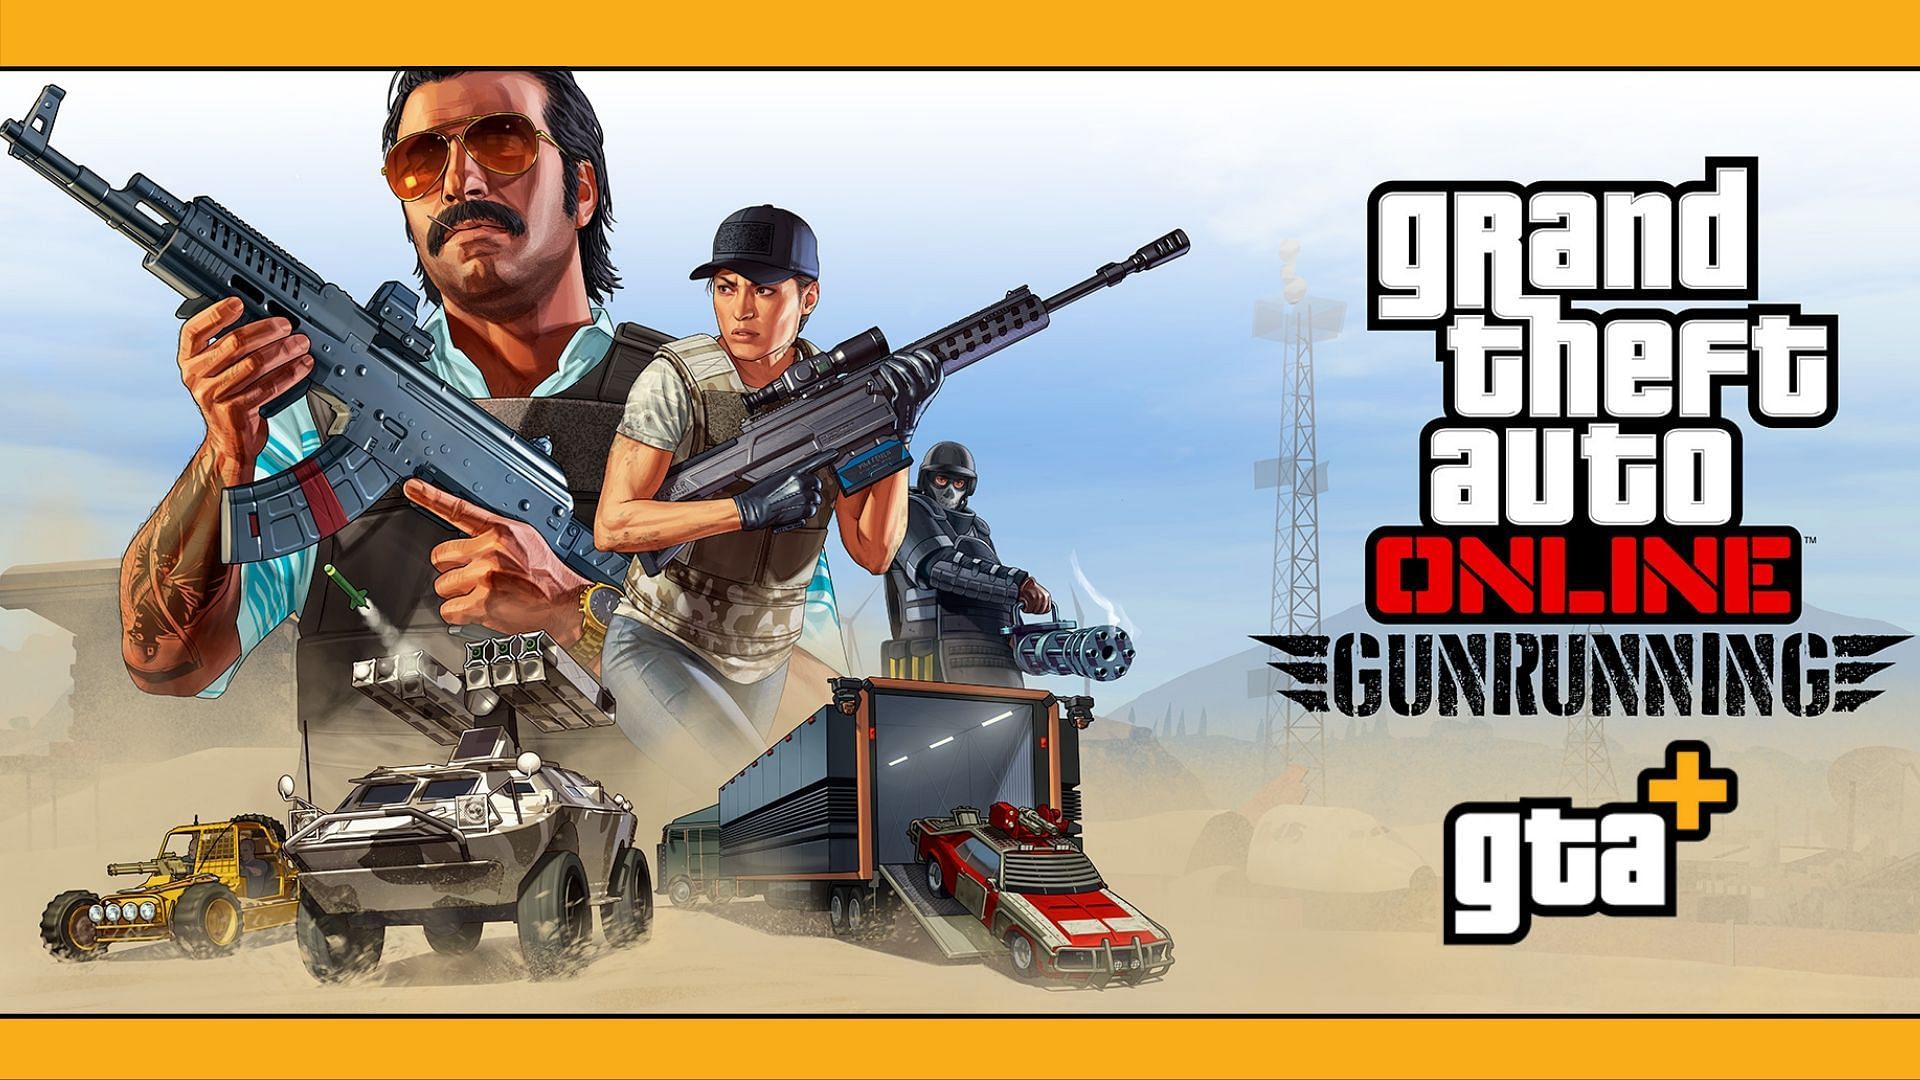 Gunrunning missions are stock selling missions in GTA Online (Image via Sportskeeda)